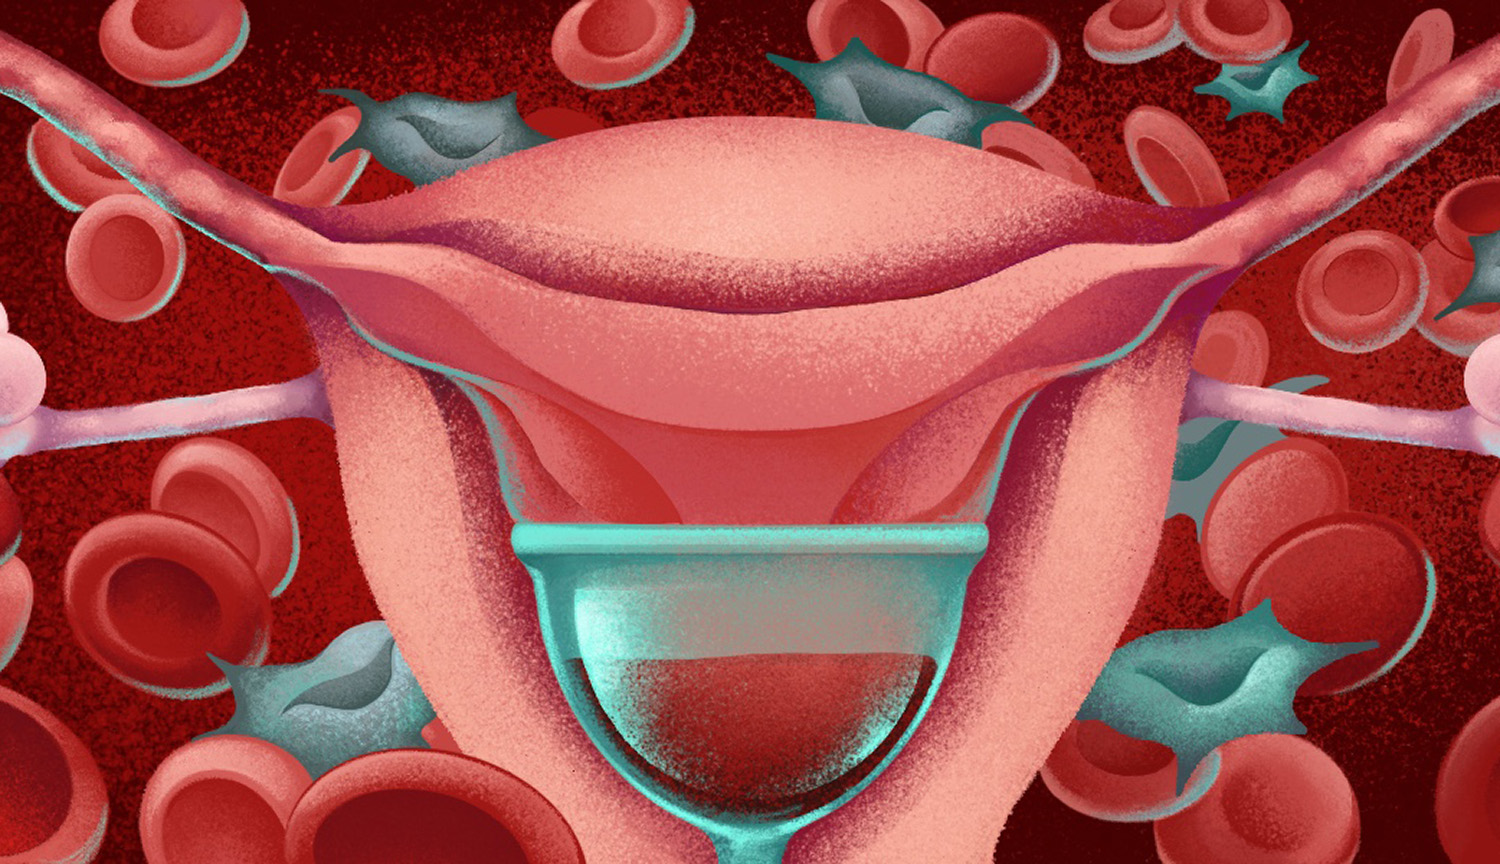 Artist’s rendering of uterus and stem cells in menstrual blood